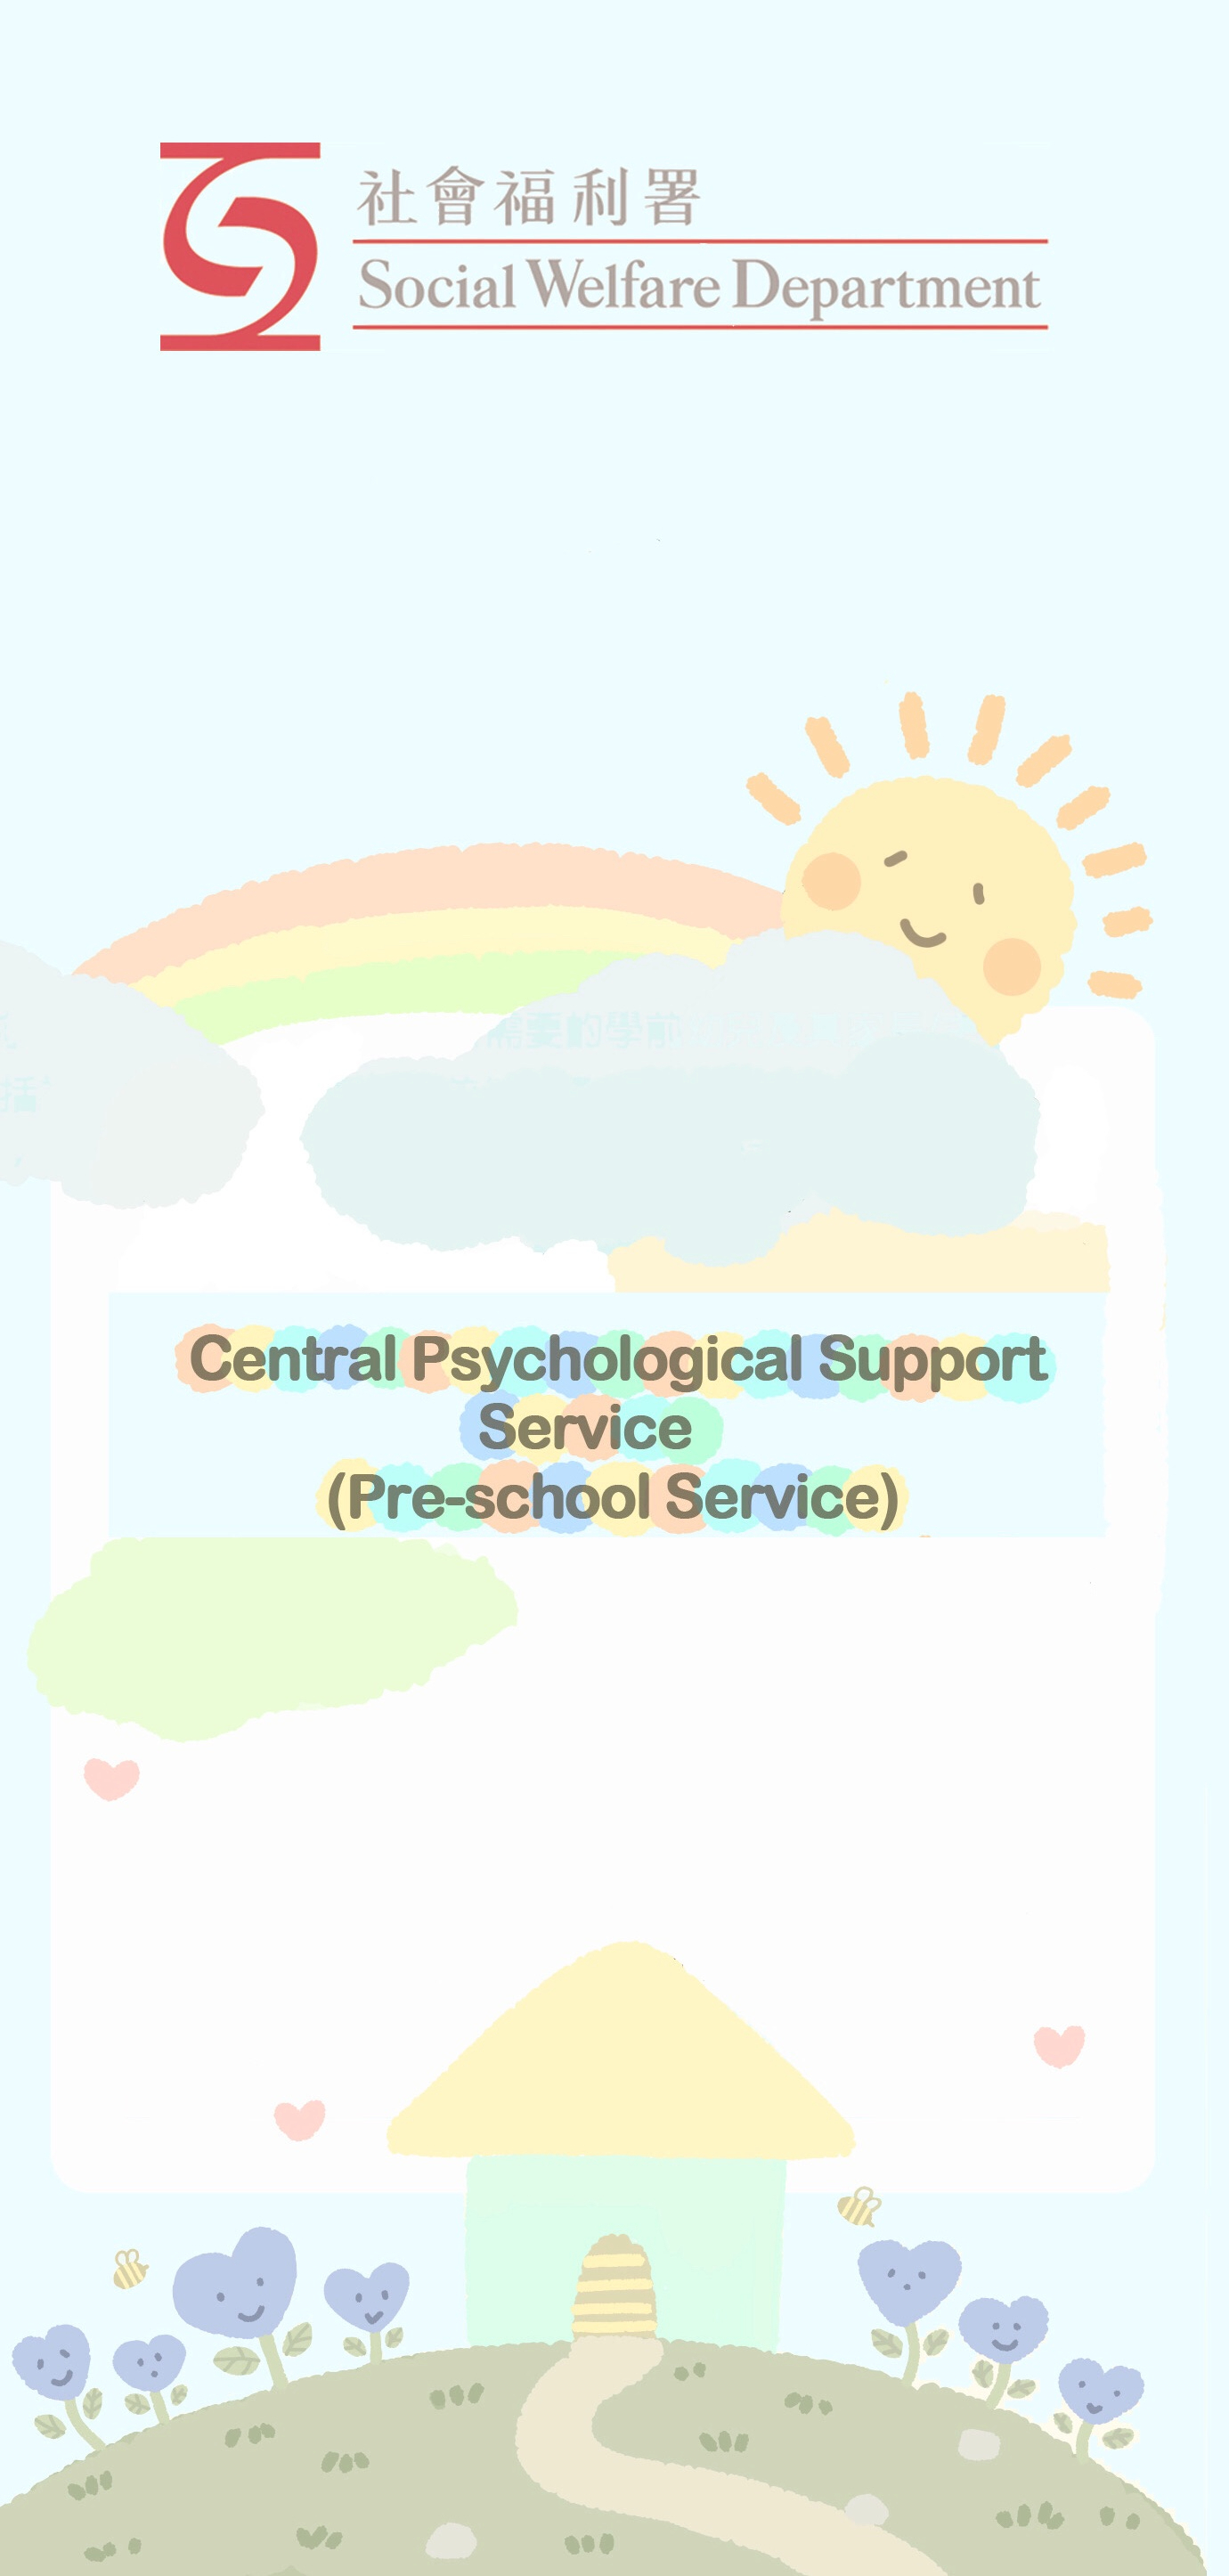 Central Psychological Support Service
                (Pre-school Service)